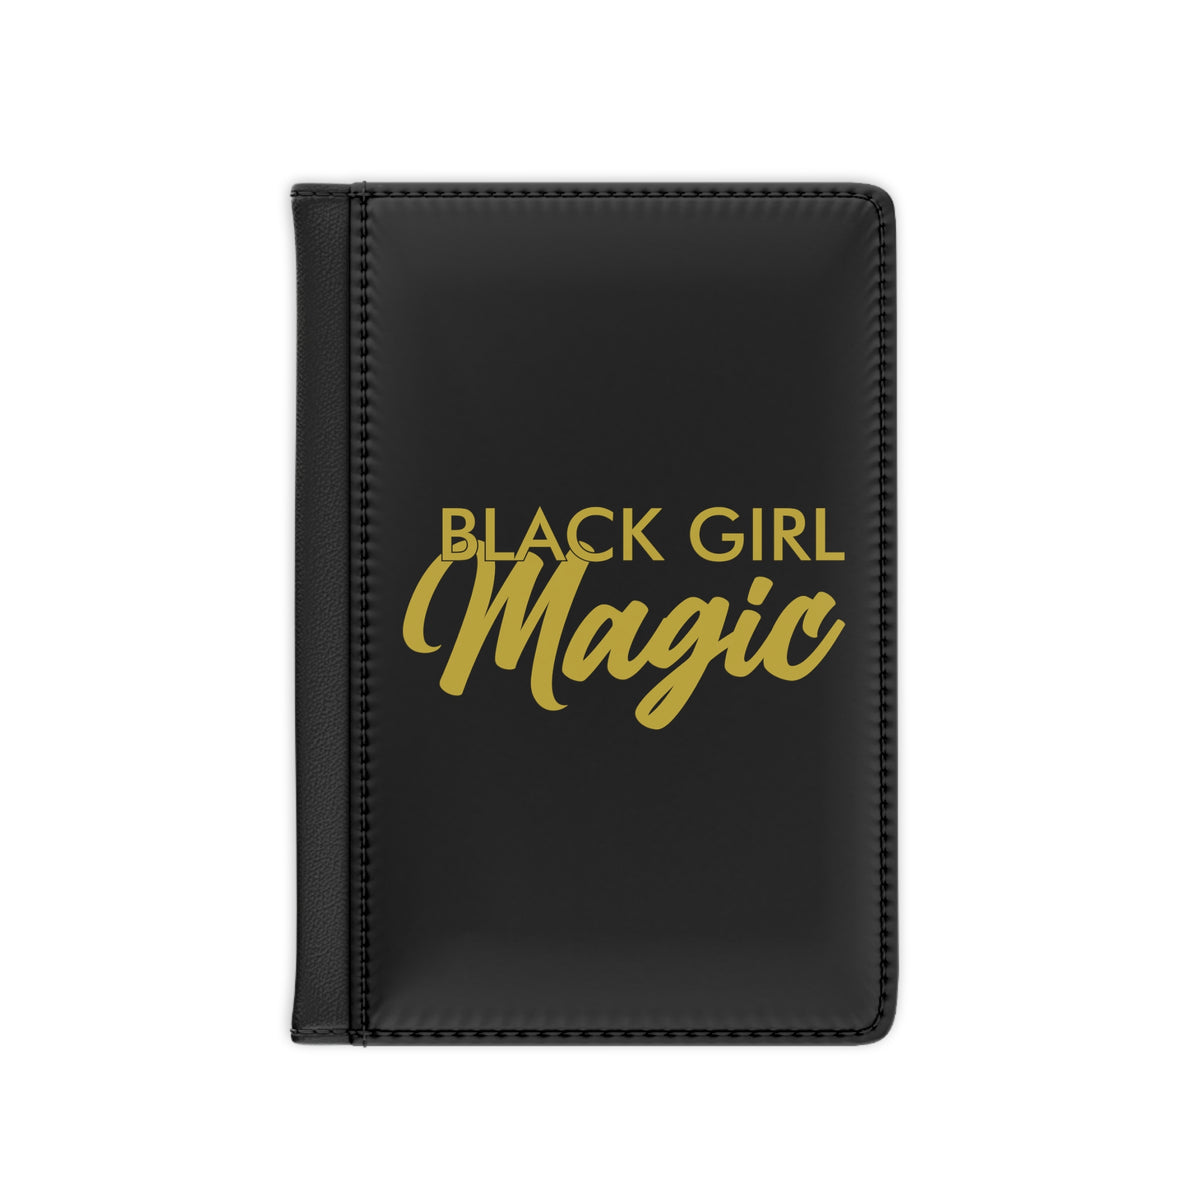 Black Magic Girl Passport Cover